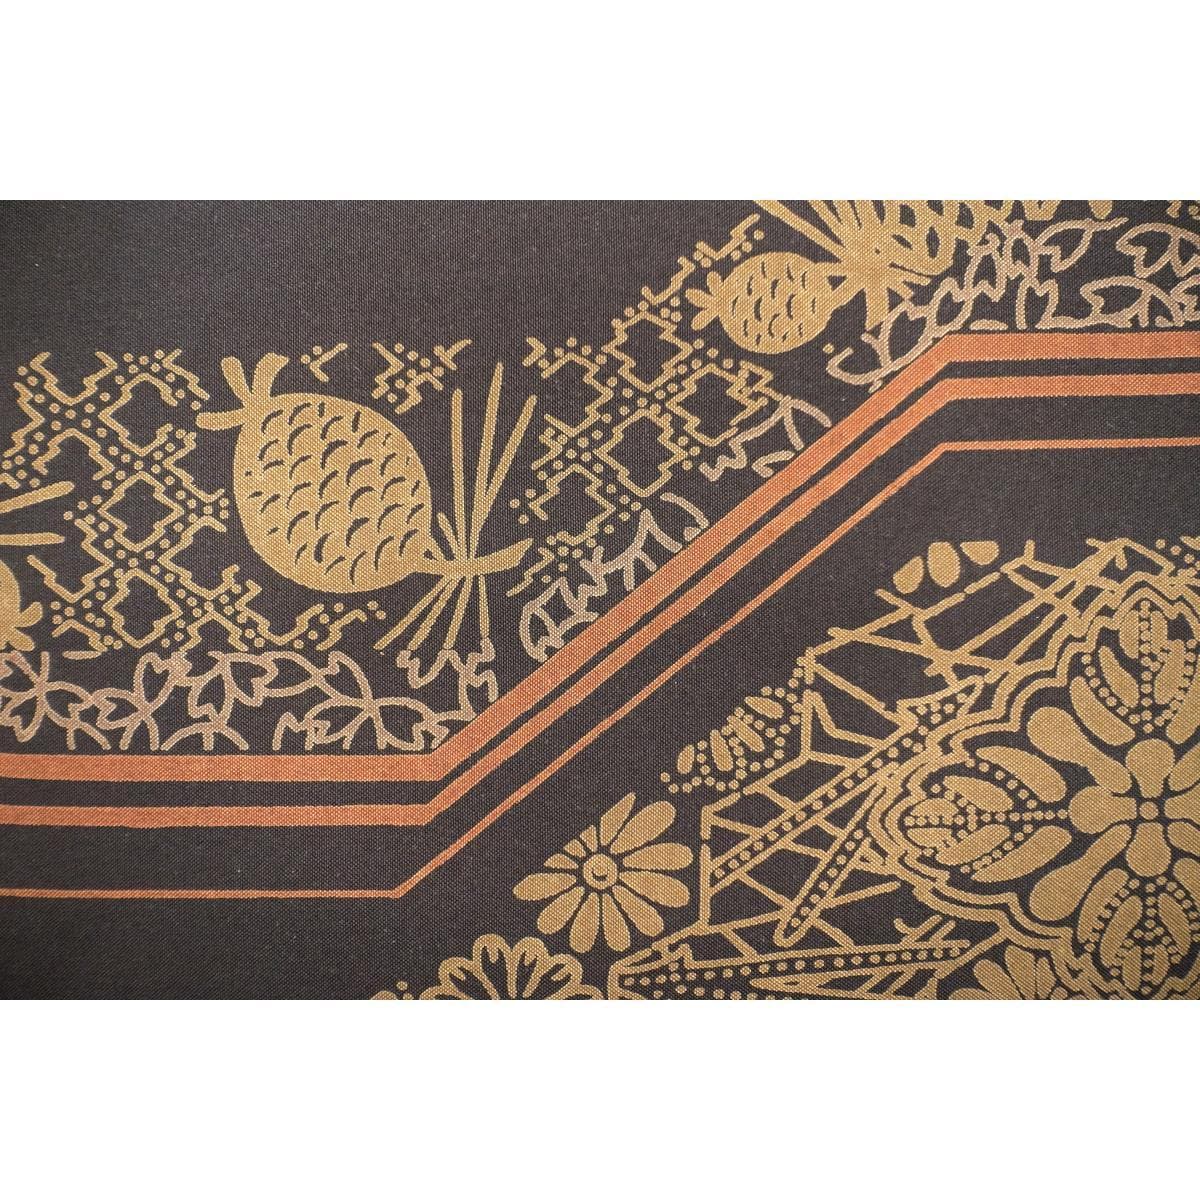 [Unused items] Fukuro obi dyed pongee Zento pattern